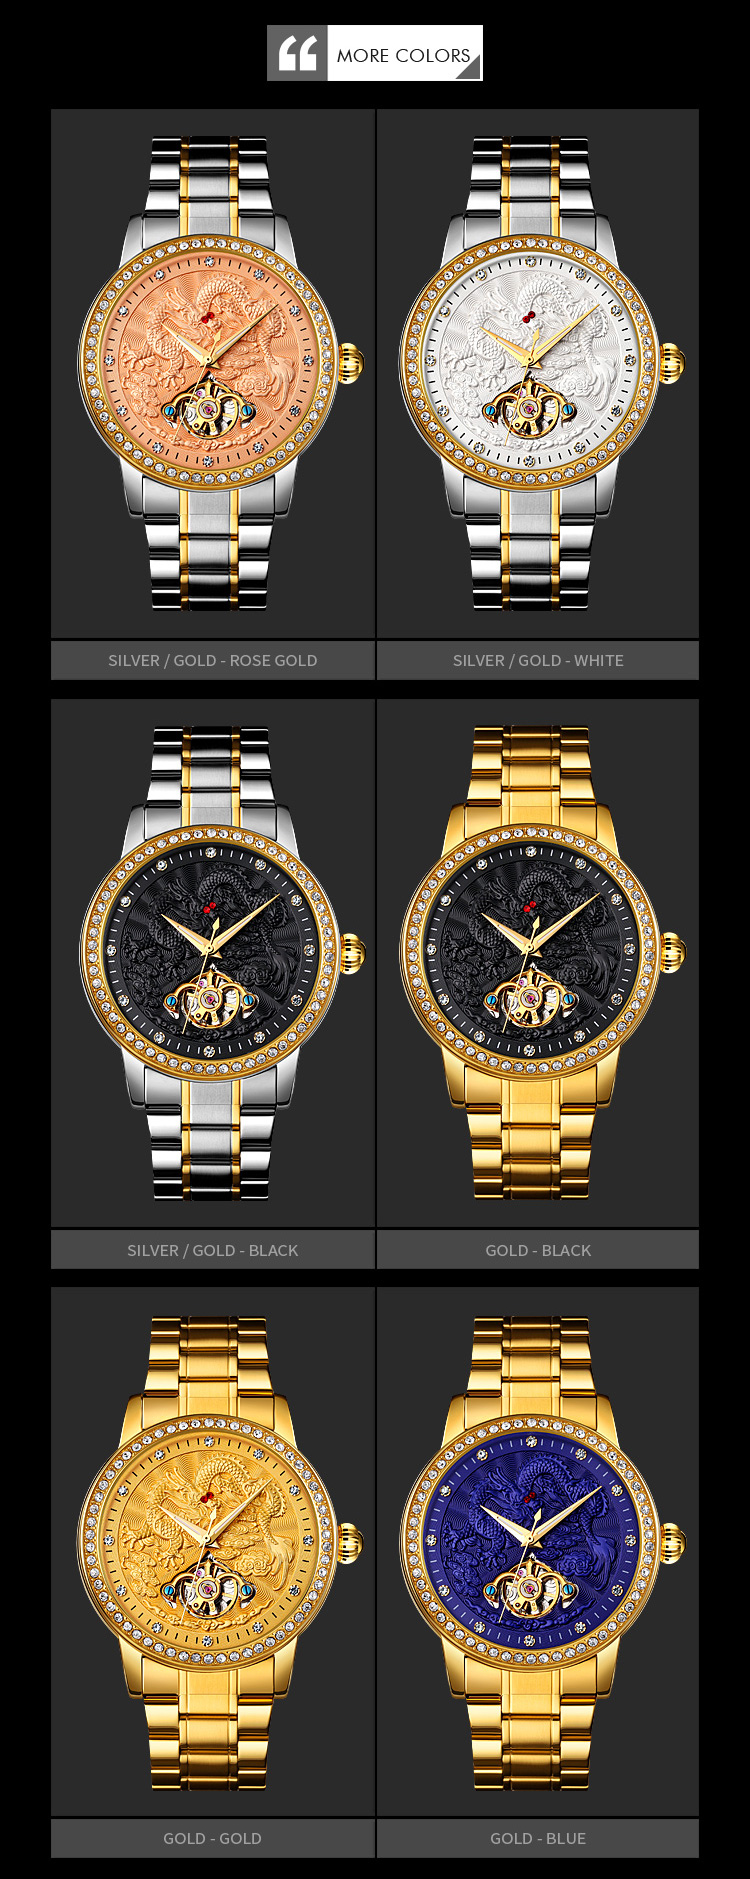 SKMEI 9219 Fashion Men Automatic Watch Dragon Diamond Hollow Big Dial Hardlex Glass Waterproof Mechanical Watch